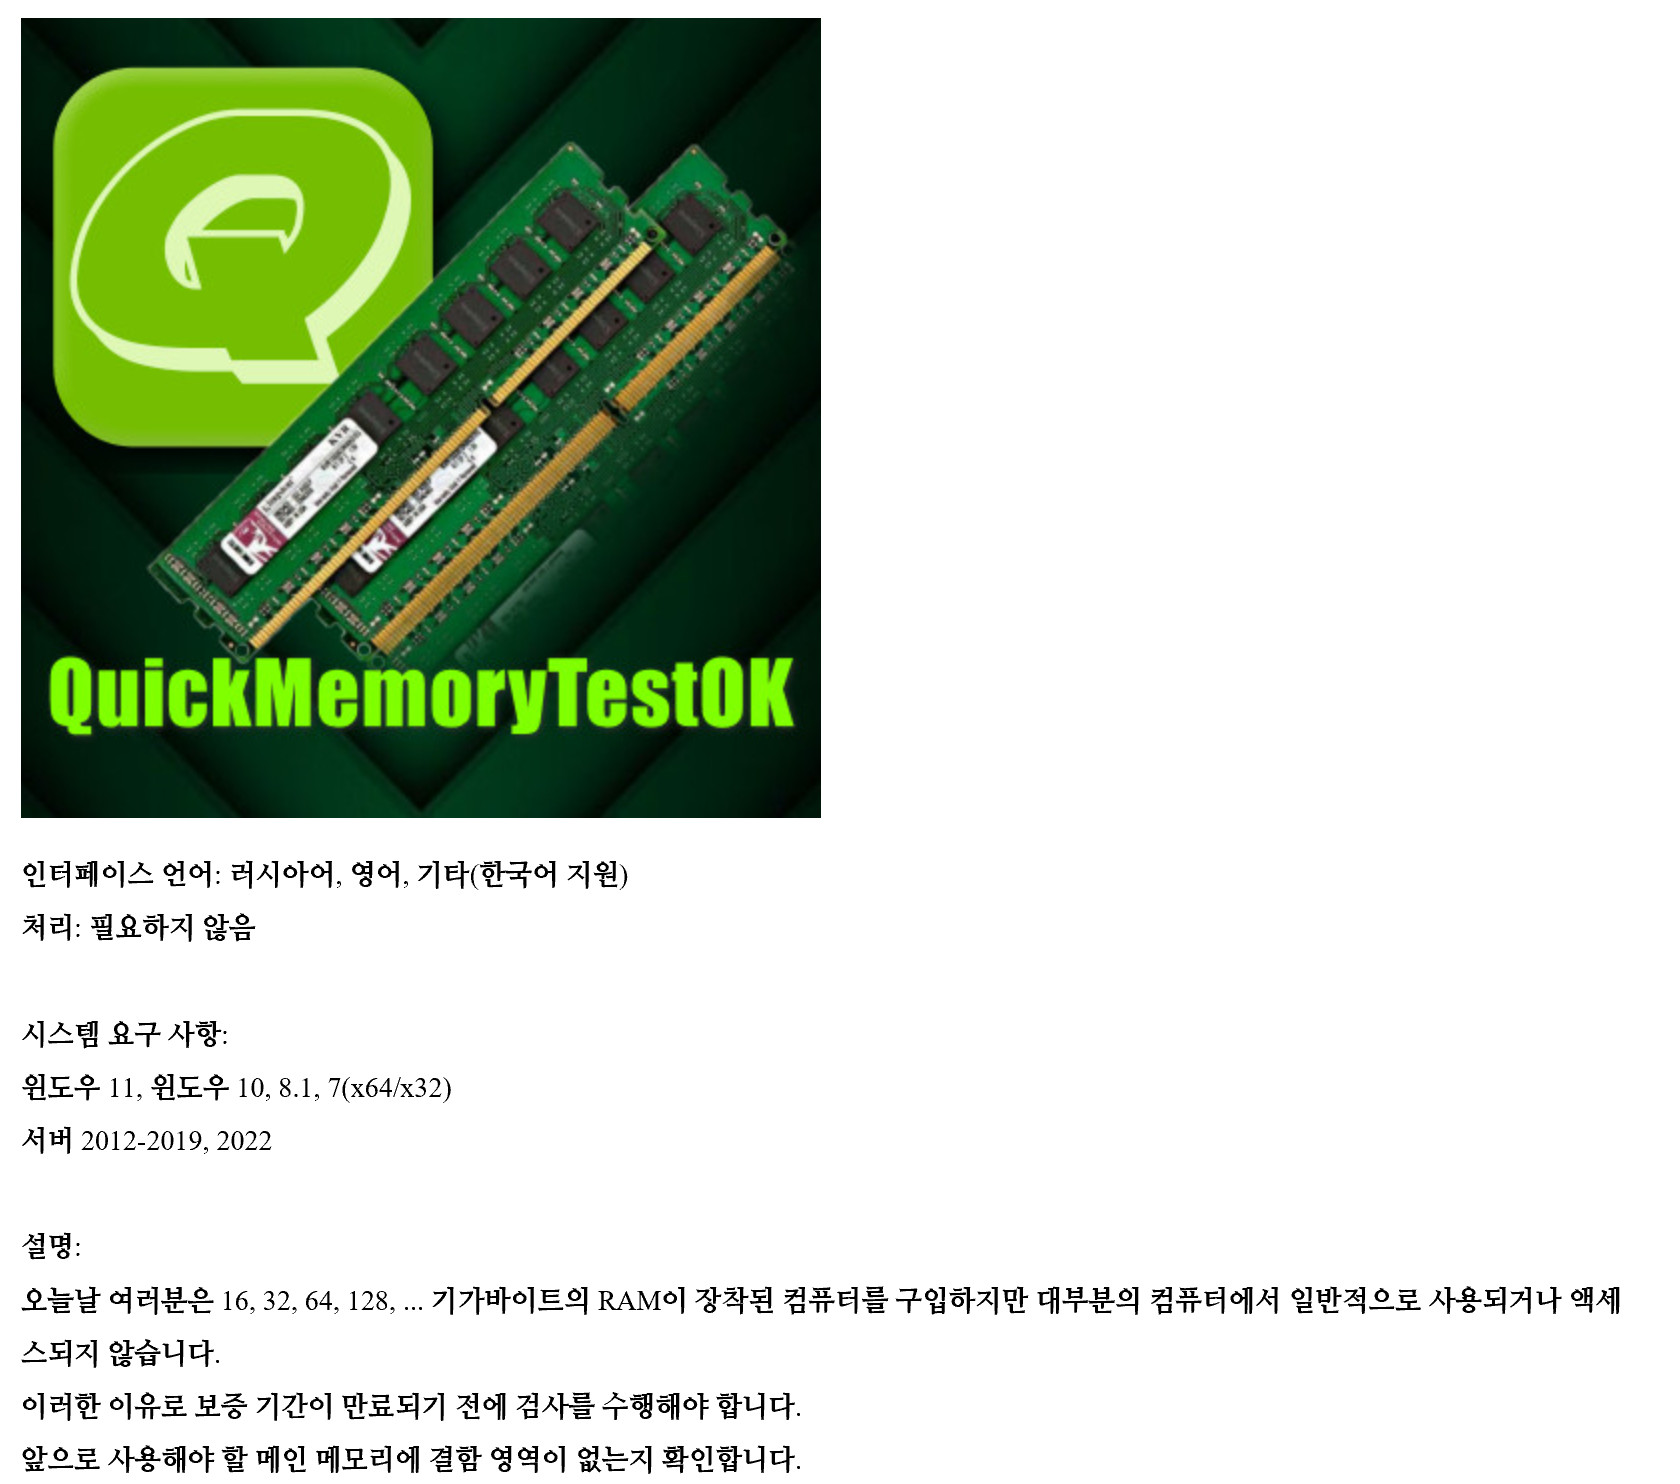 QuickMemoryTestOK 4.67 download the last version for mac